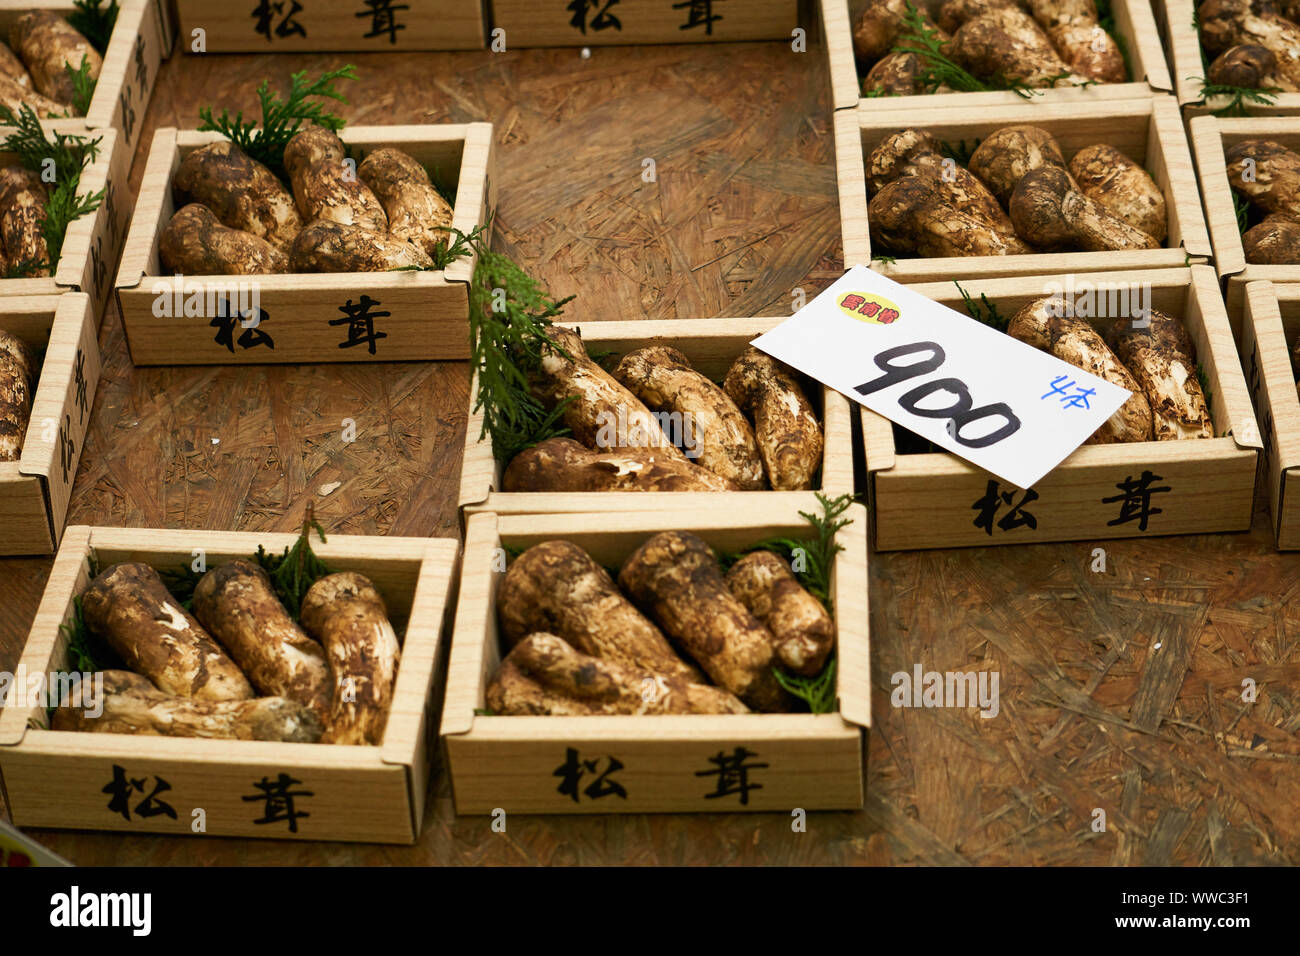 Matsutake mushrooms (Tricholoma matsutake) for sale in wooden boxes at Tsukiji Wholesale Market in Tokyo, Japan. Stock Photo